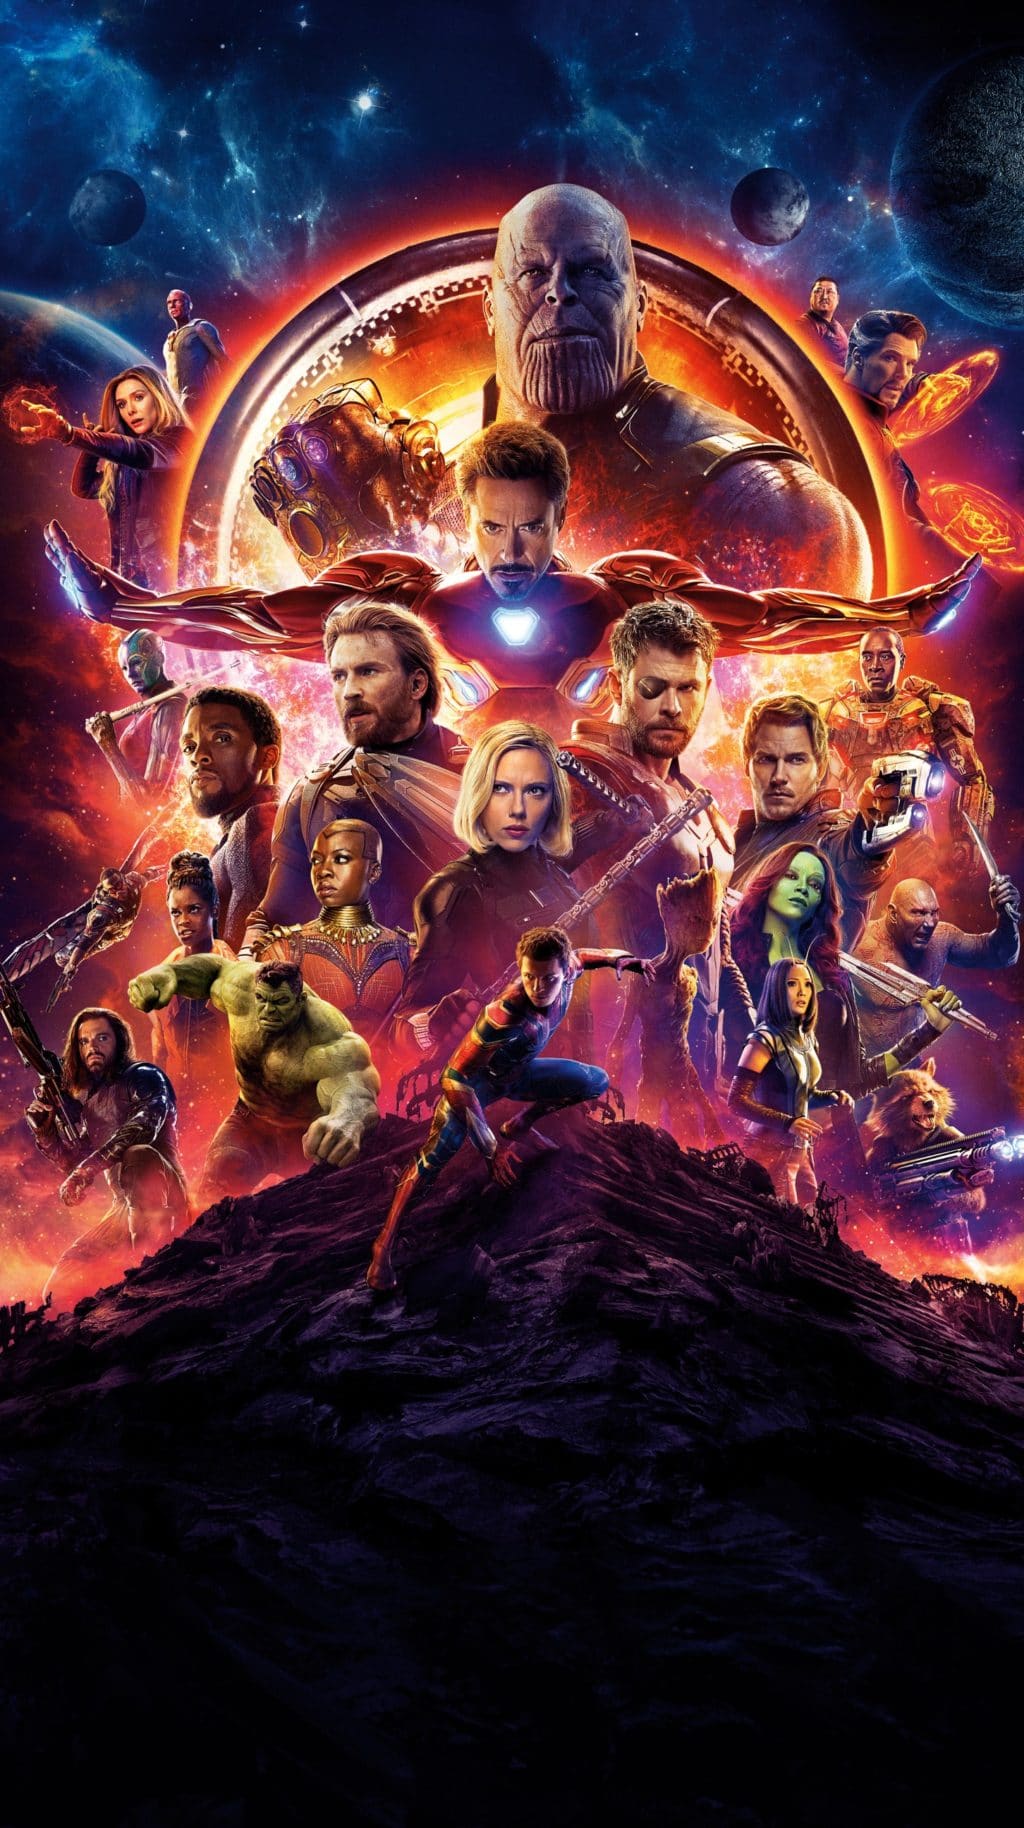 Wallpaper Wednesday: Avengers Infinity War Themed Wallpaper